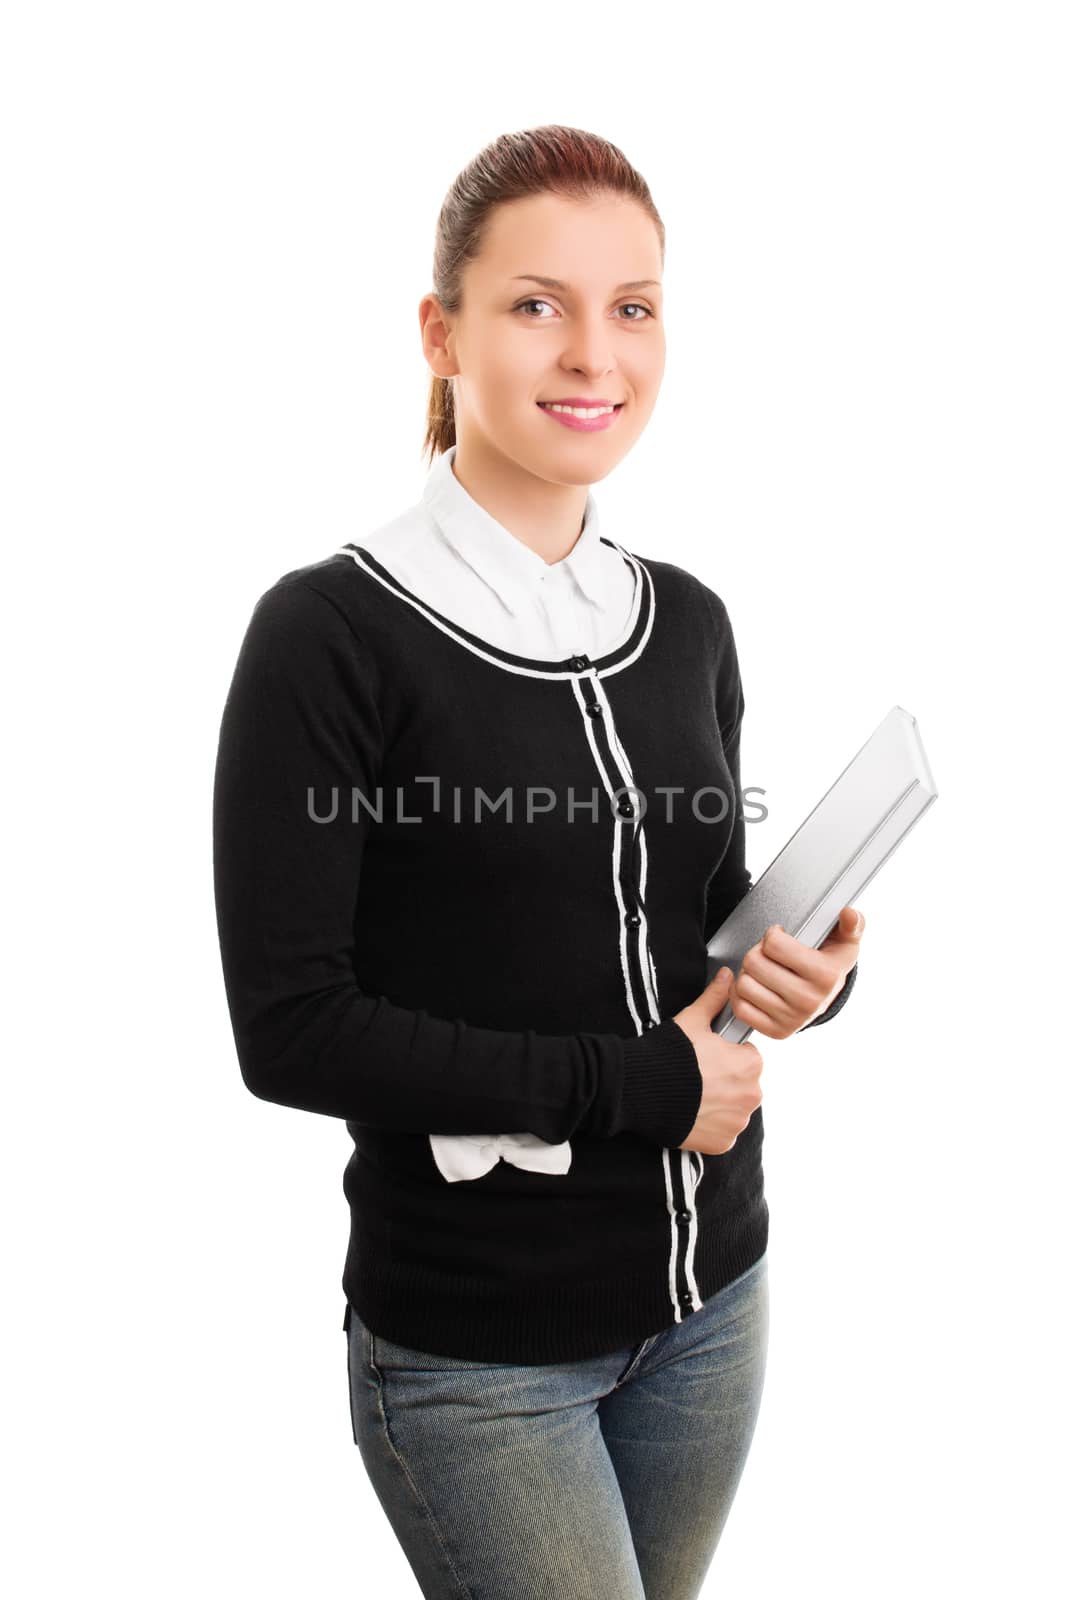 Girl in uniform holding books by Mendelex